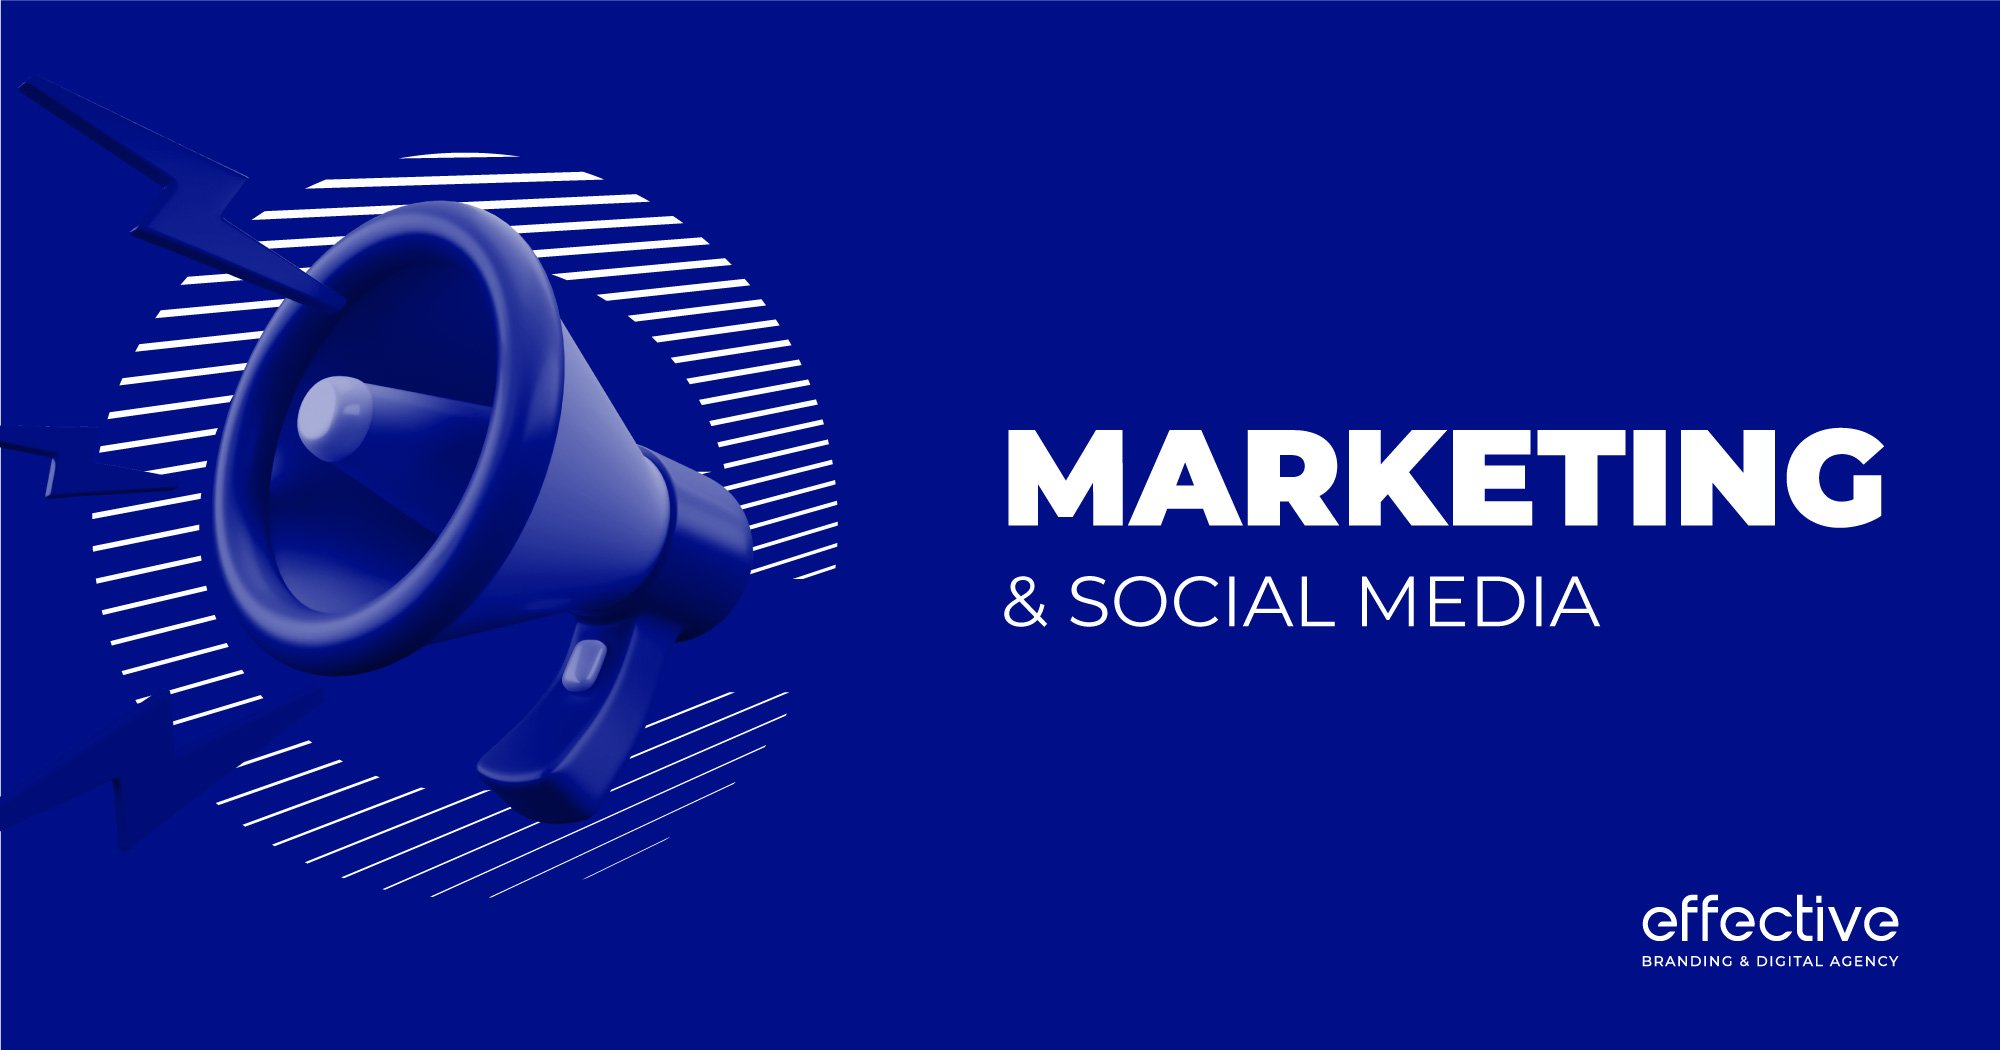 Best Social Media Marketing Agency in the UAE